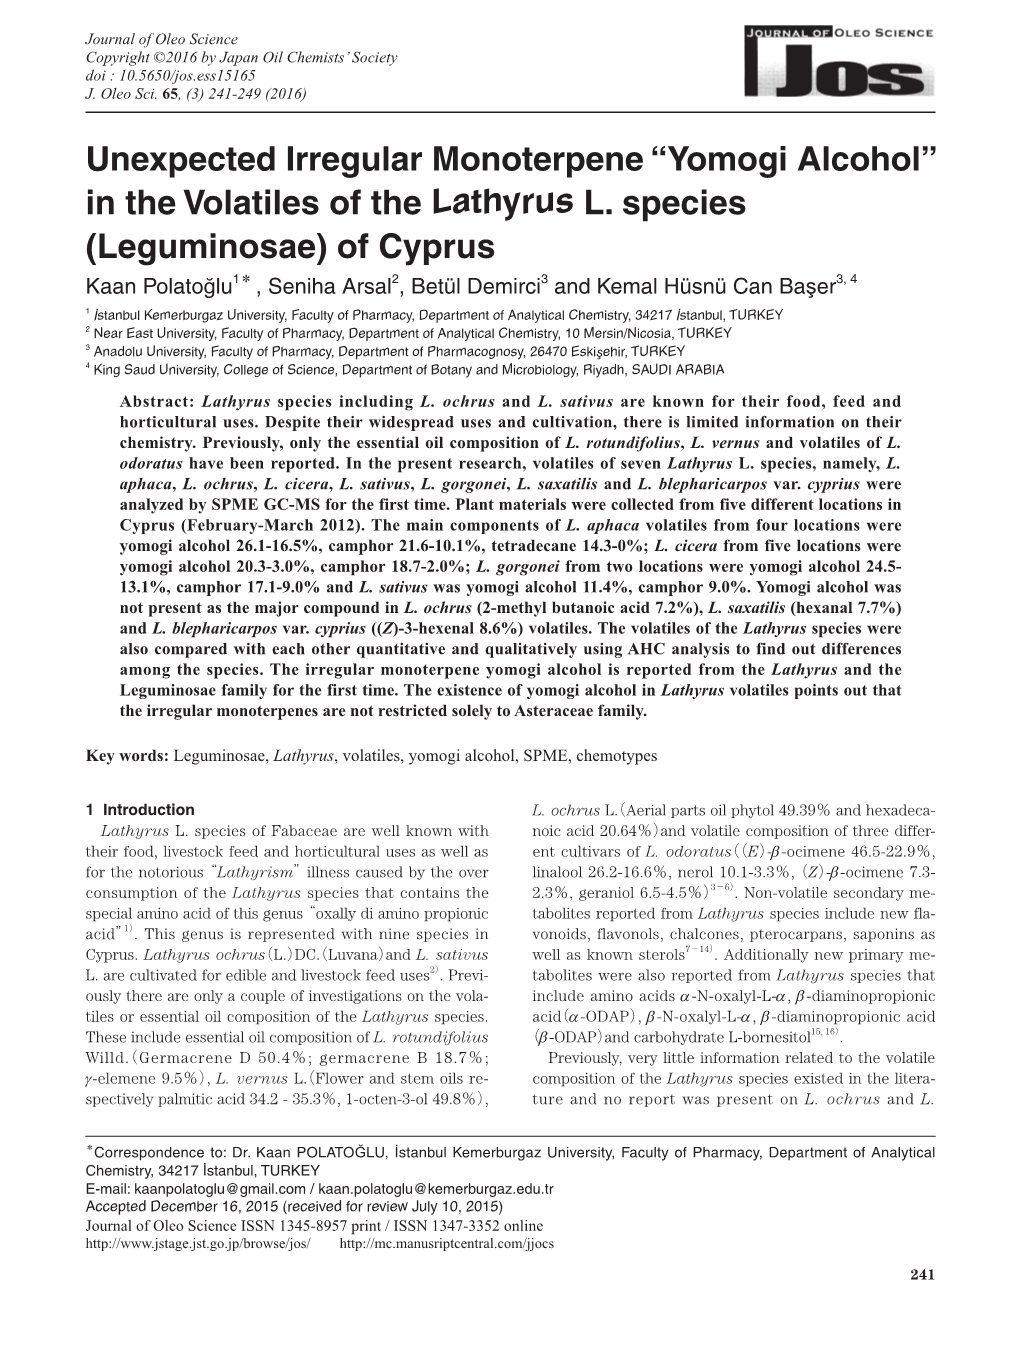 Unexpected Irregular Monoterpene “Yomogi Alcohol” in the Volatiles of the Lathyrus L